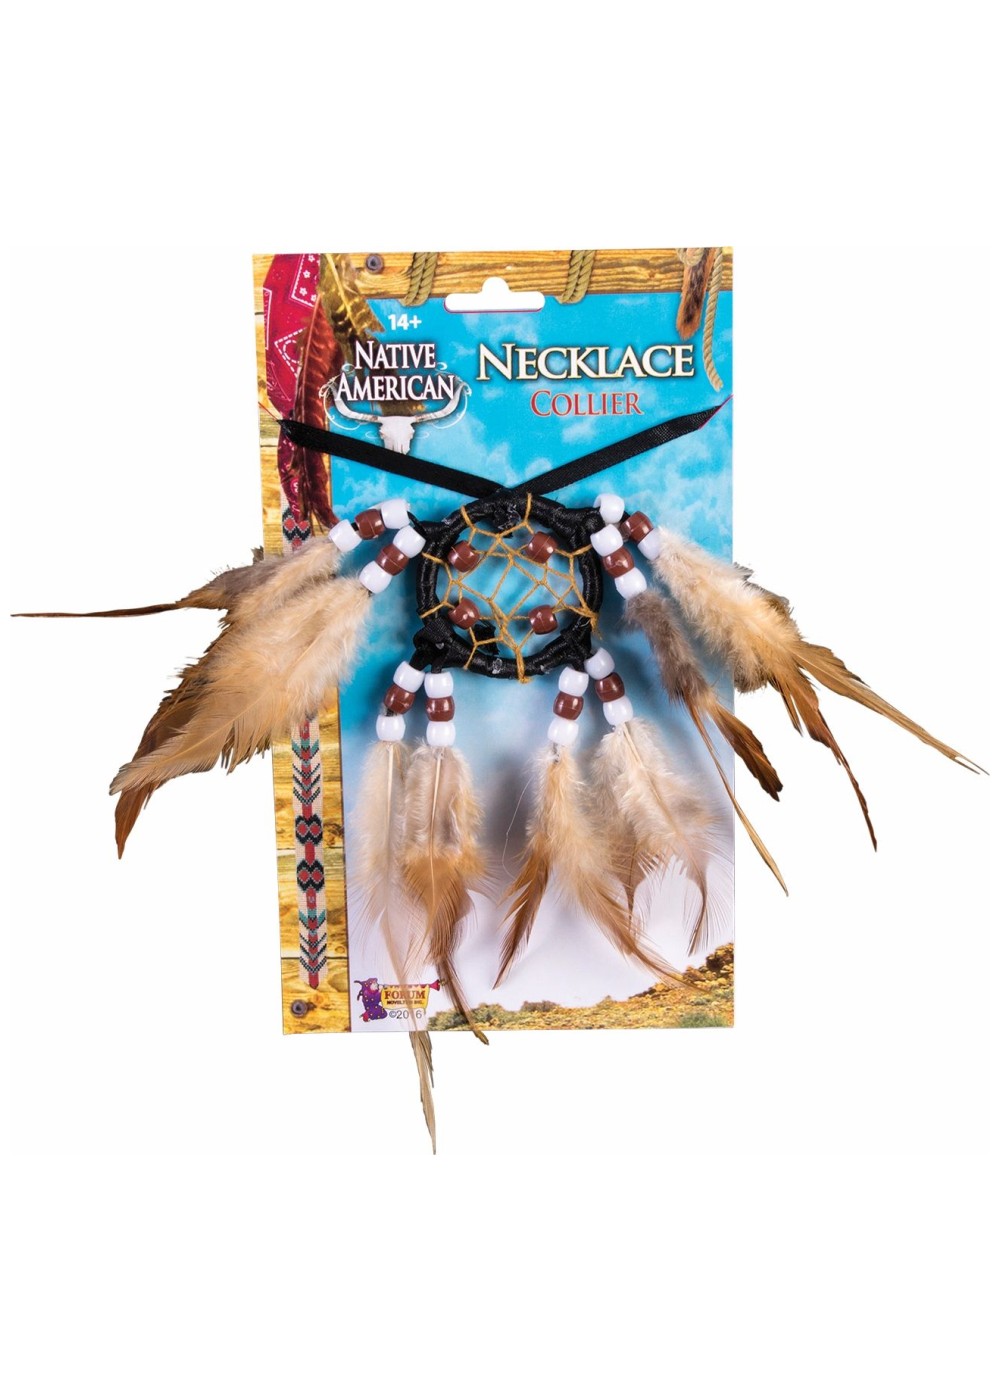 Native American Necklace Collar